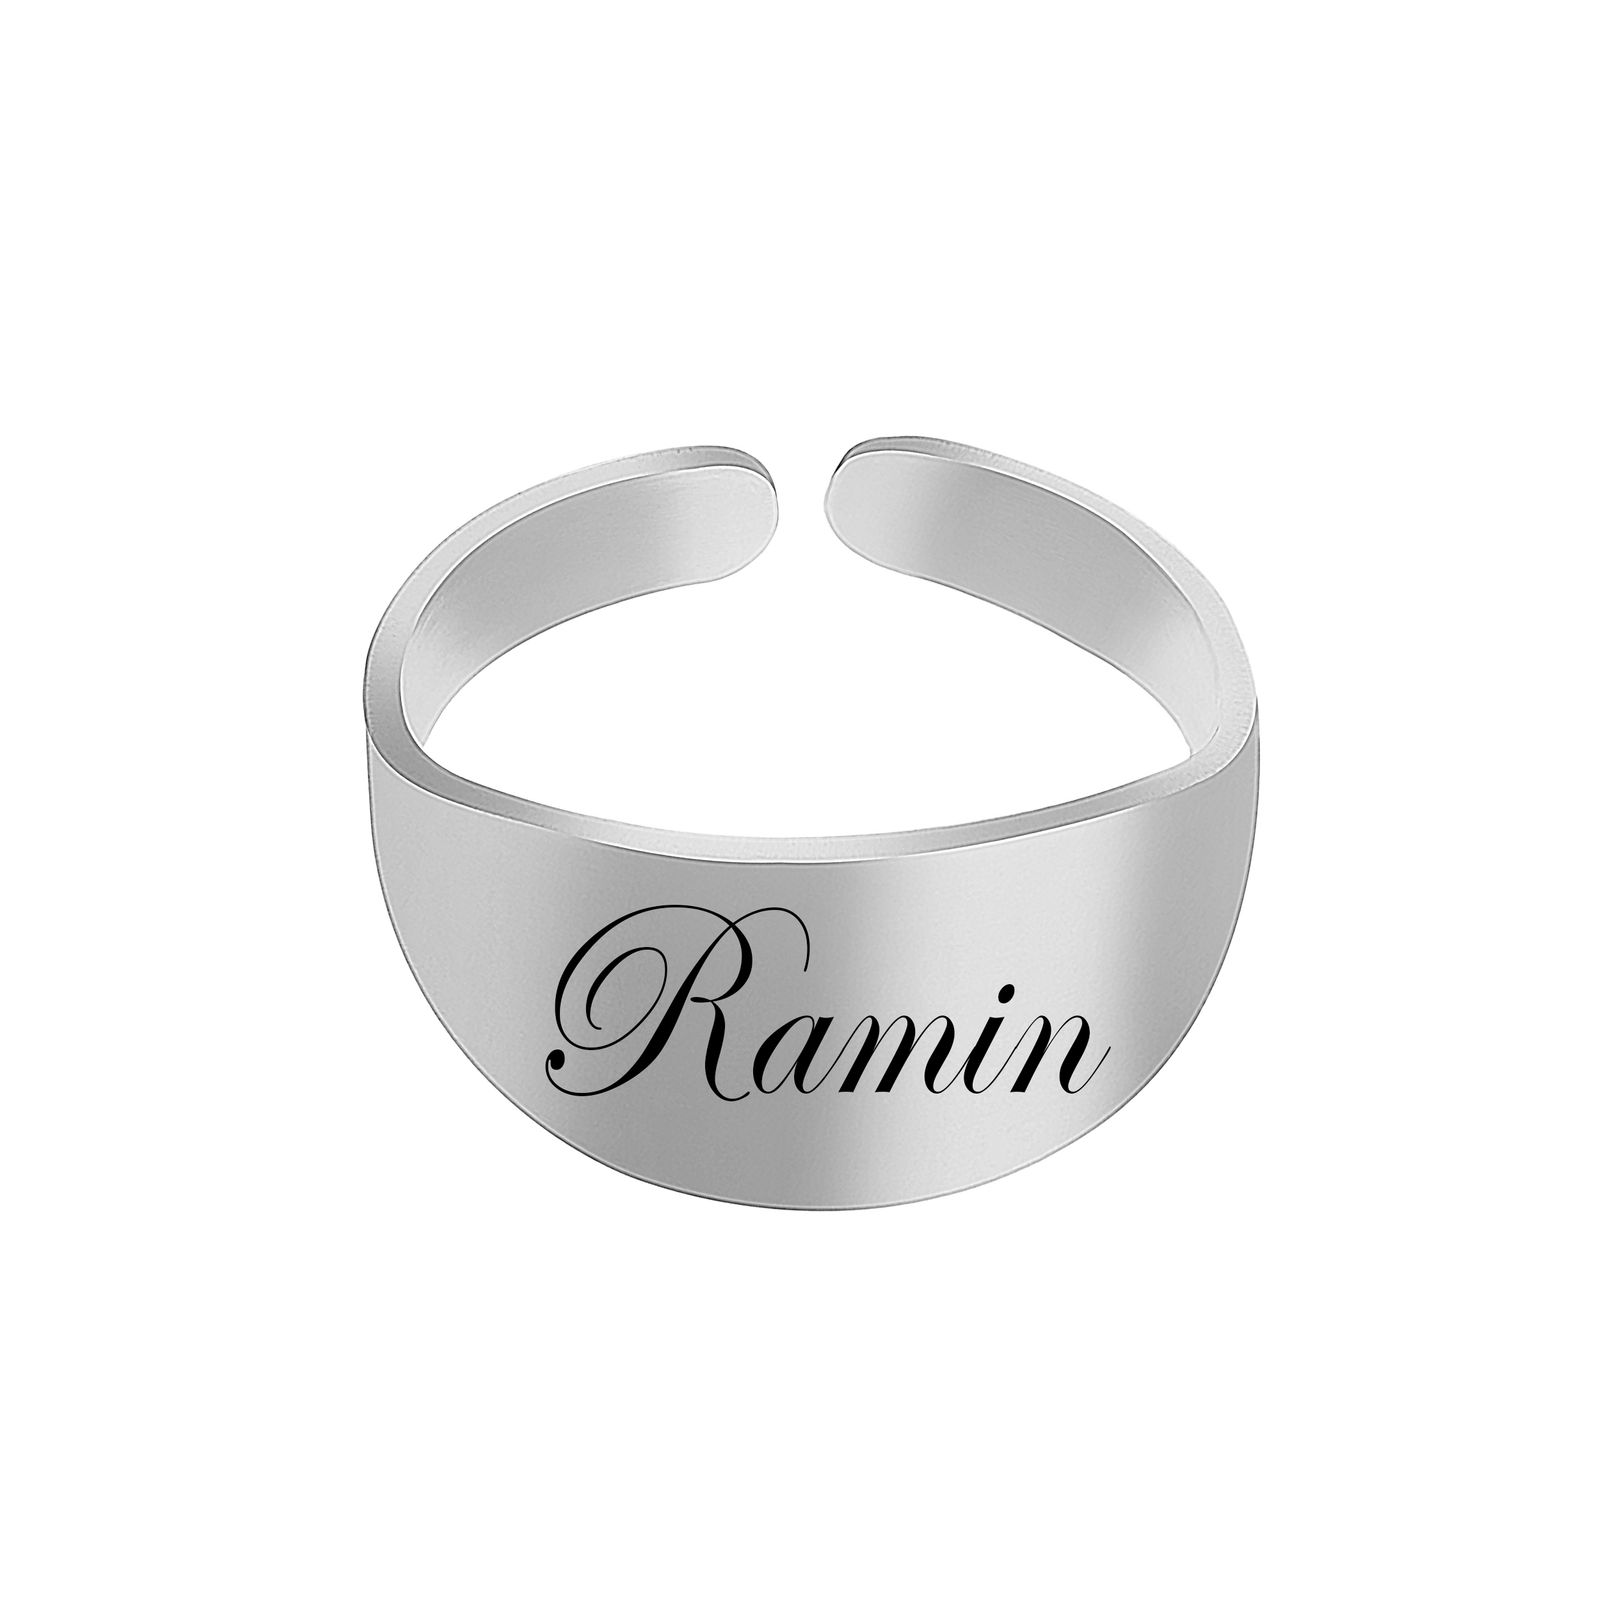 انگشتر مردانه لیردا مدل اسم رامین astl 0062 -  - 1